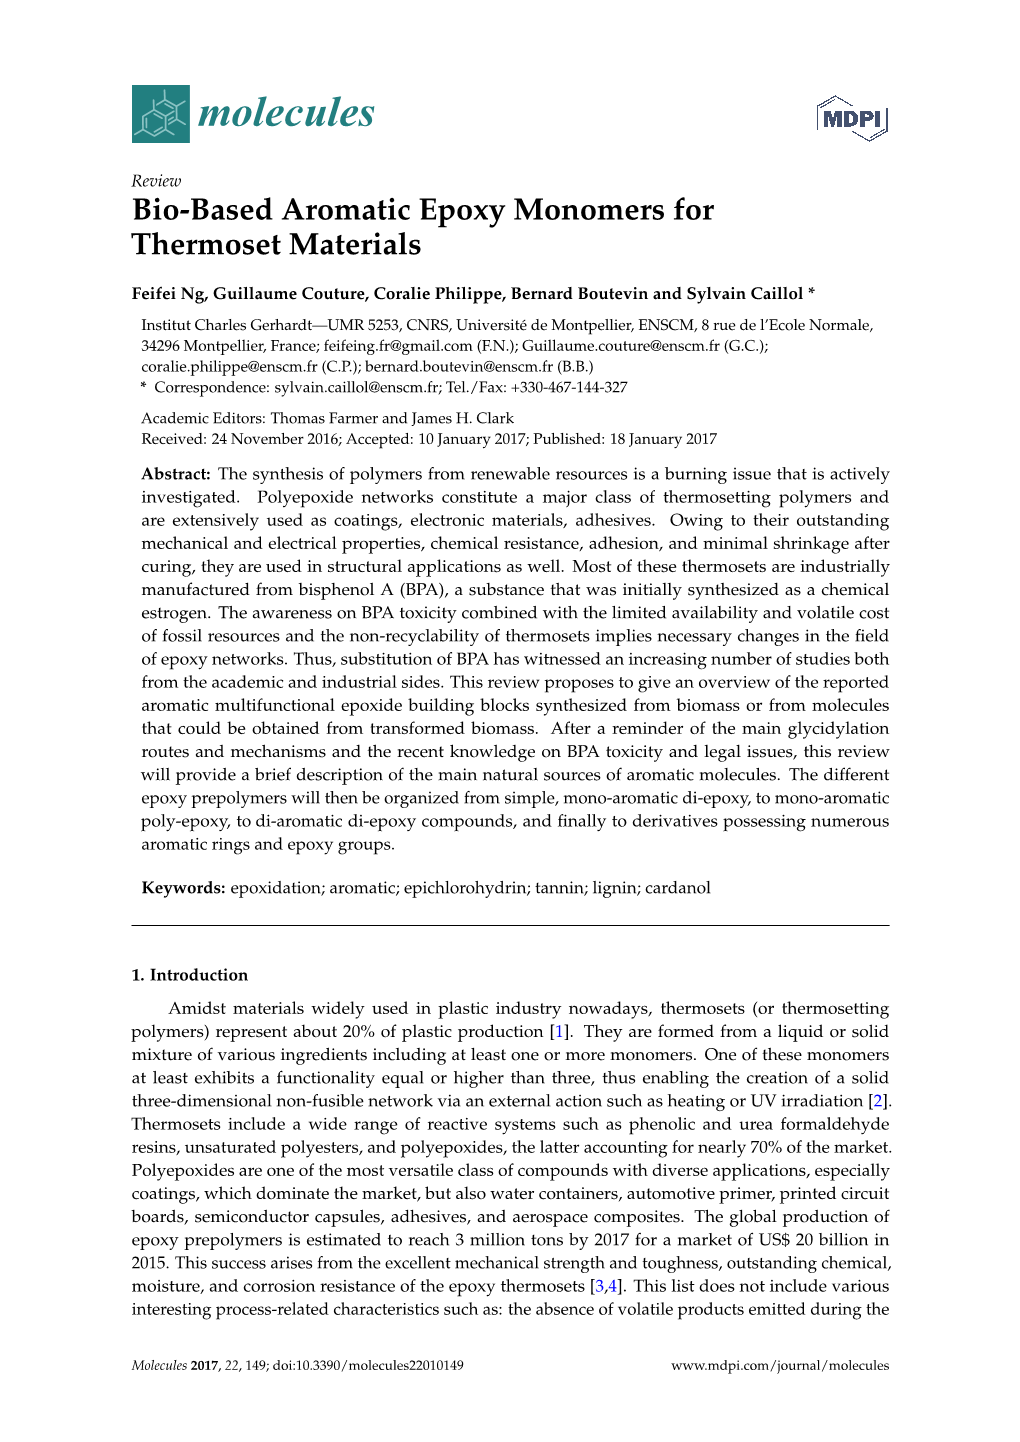 Bio-Based Aromatic Epoxy Monomers for Thermoset Materials